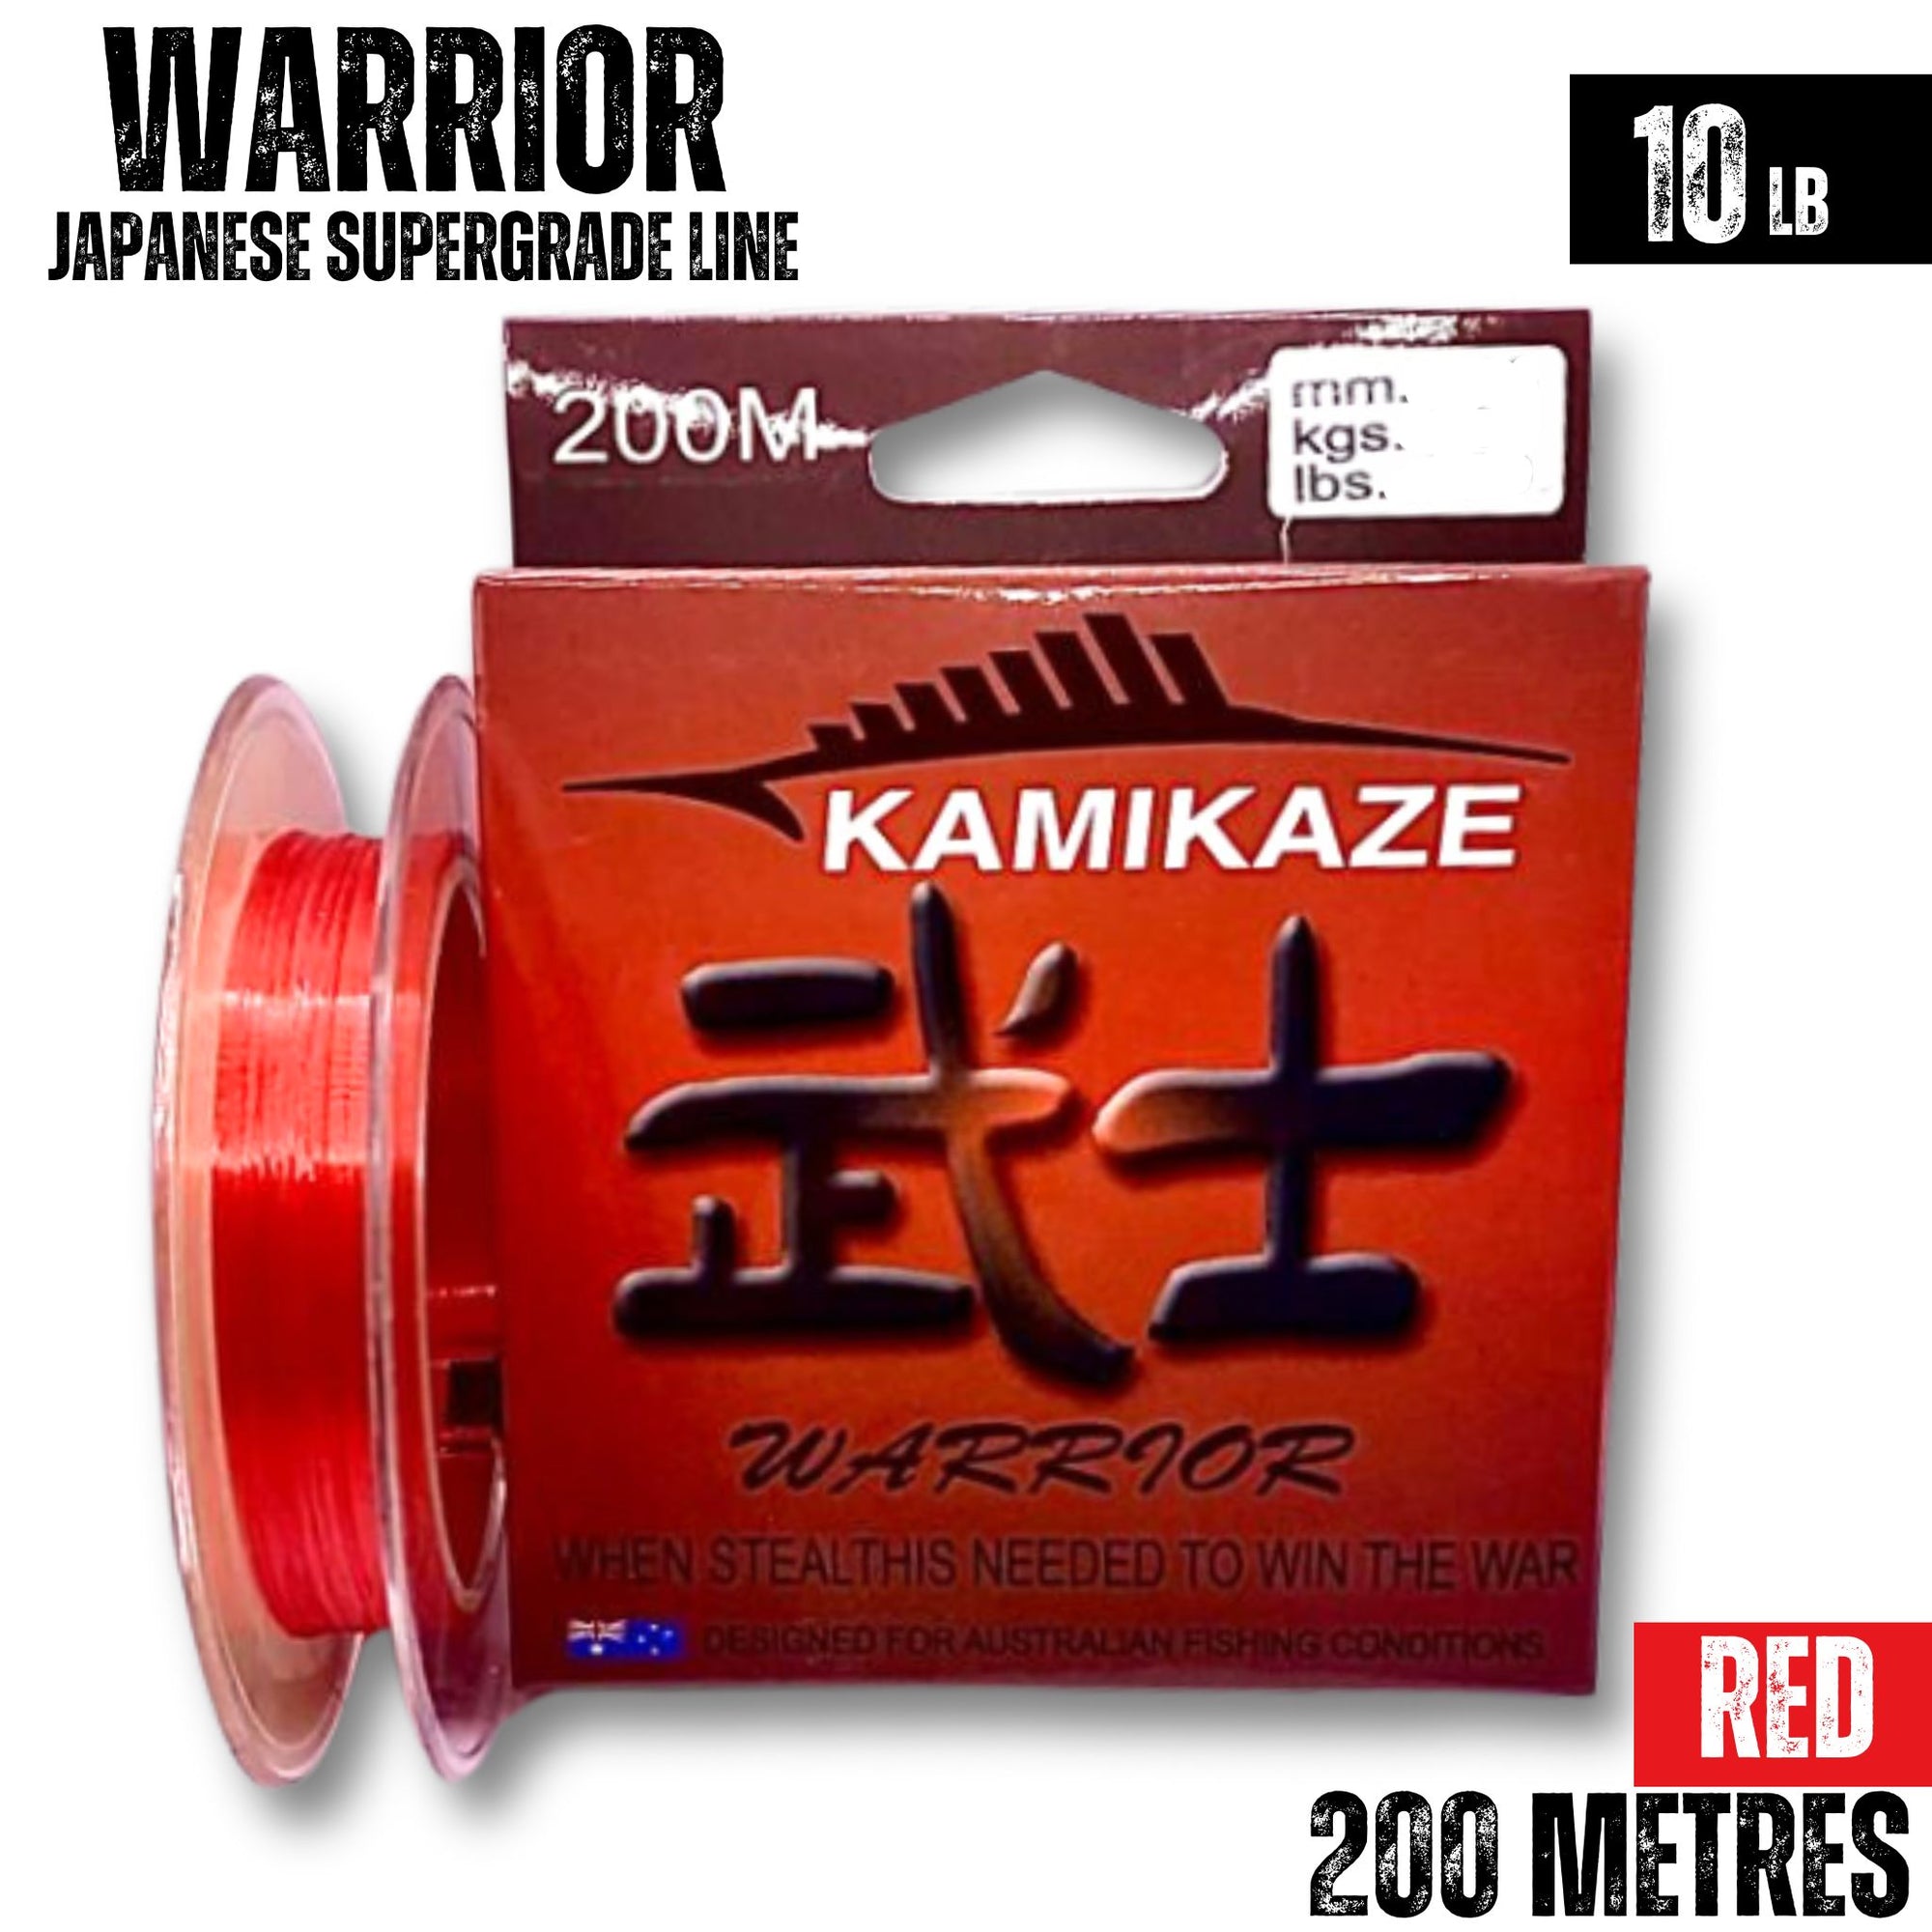 Kamikaze WARRIOR Japanese SuperGrade Line 200m 10lb RED - South East Clearance Centre